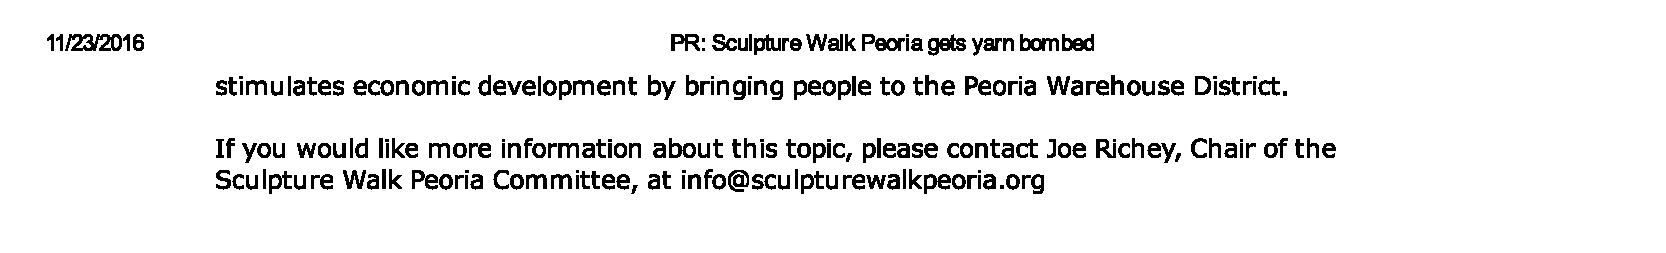 pr_-sculpture-walk-peoria-gets-yarn-bombed_page_2